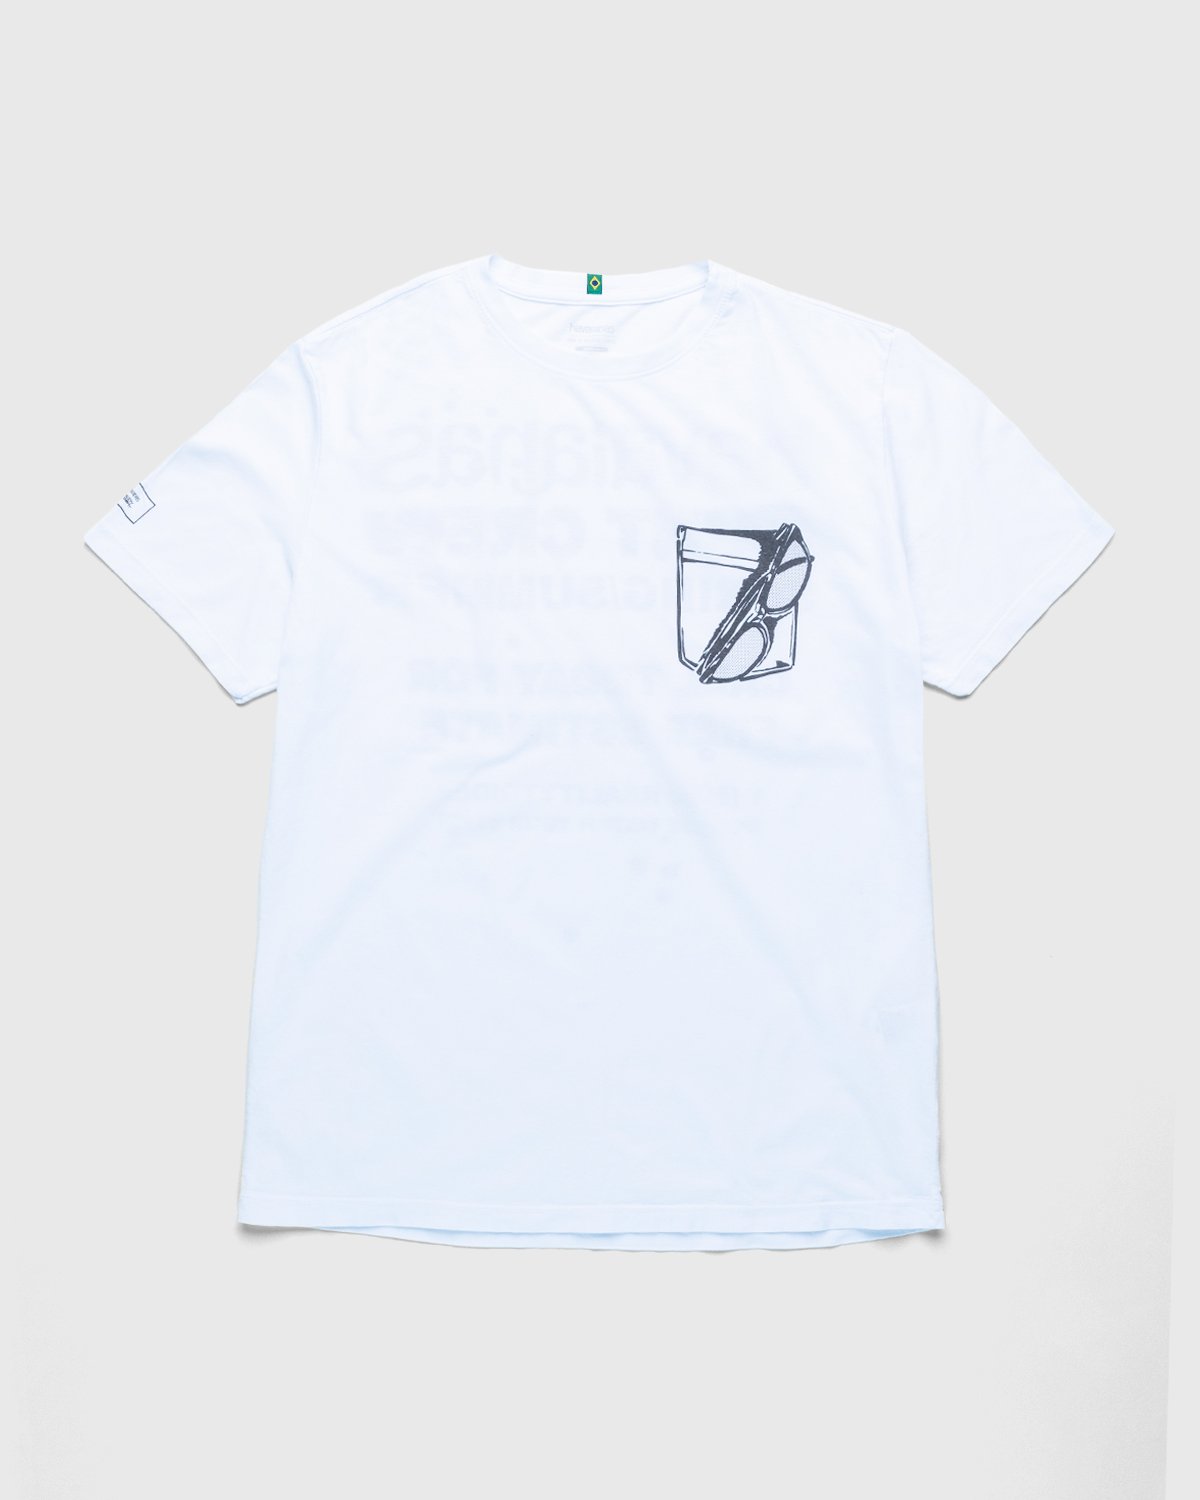 havaianas - Reality to Idea by Joshuas Vides T-Shirt White - Clothing - White - Image 1